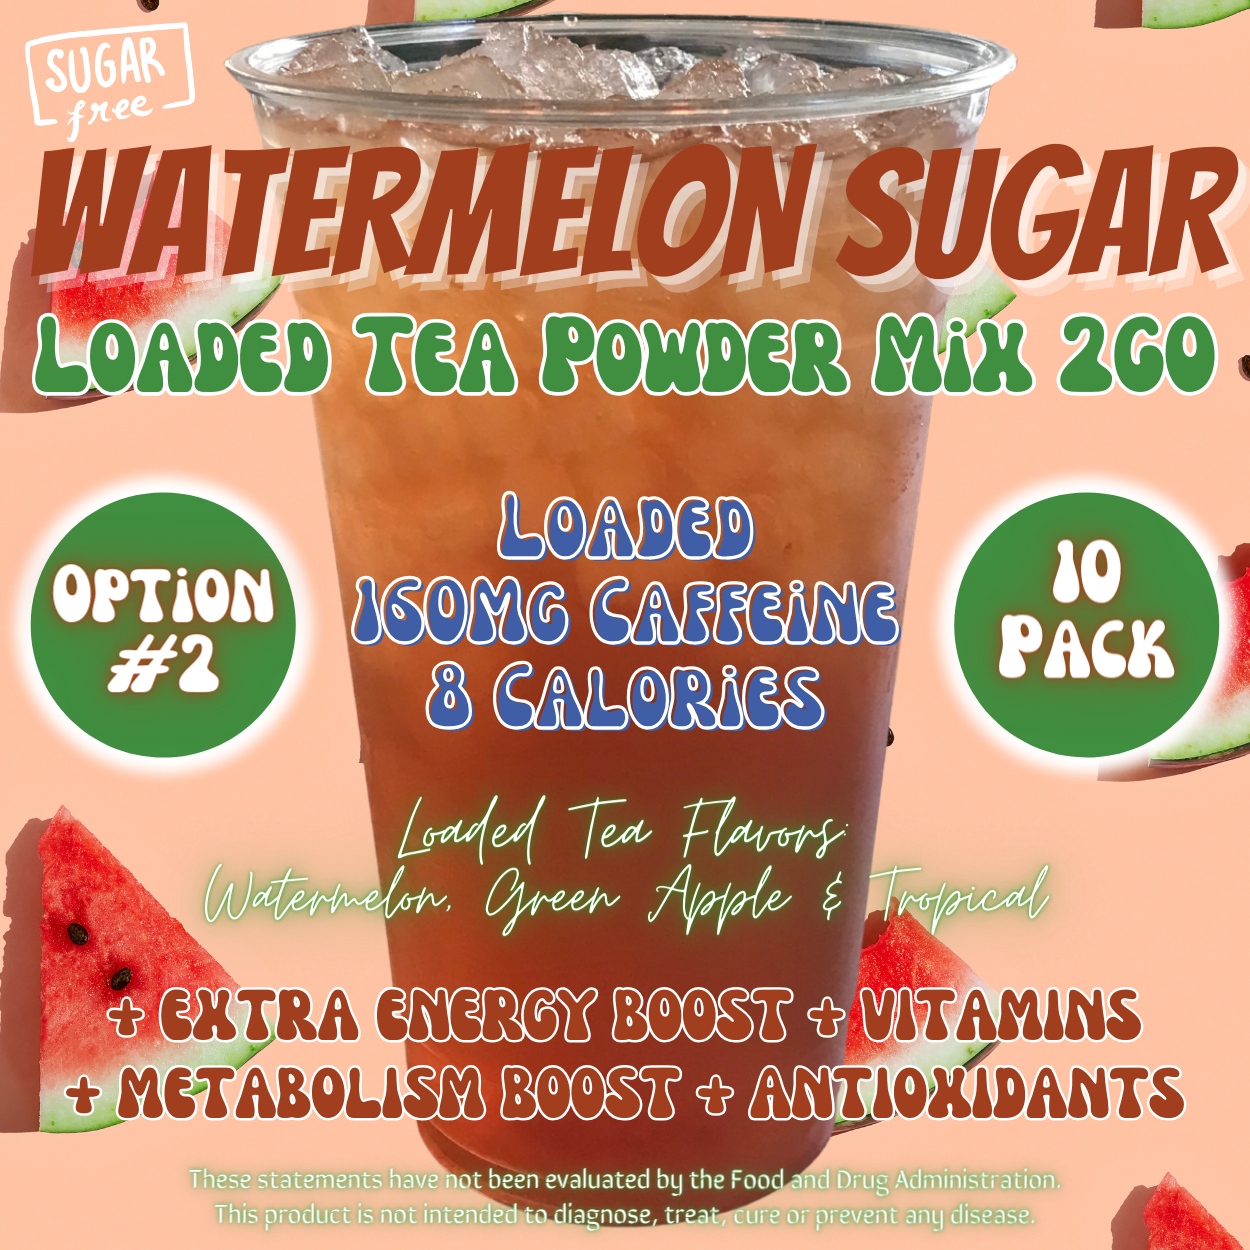 Watermelon Sugar: Loaded Tea Powder Mix 2GO Packets